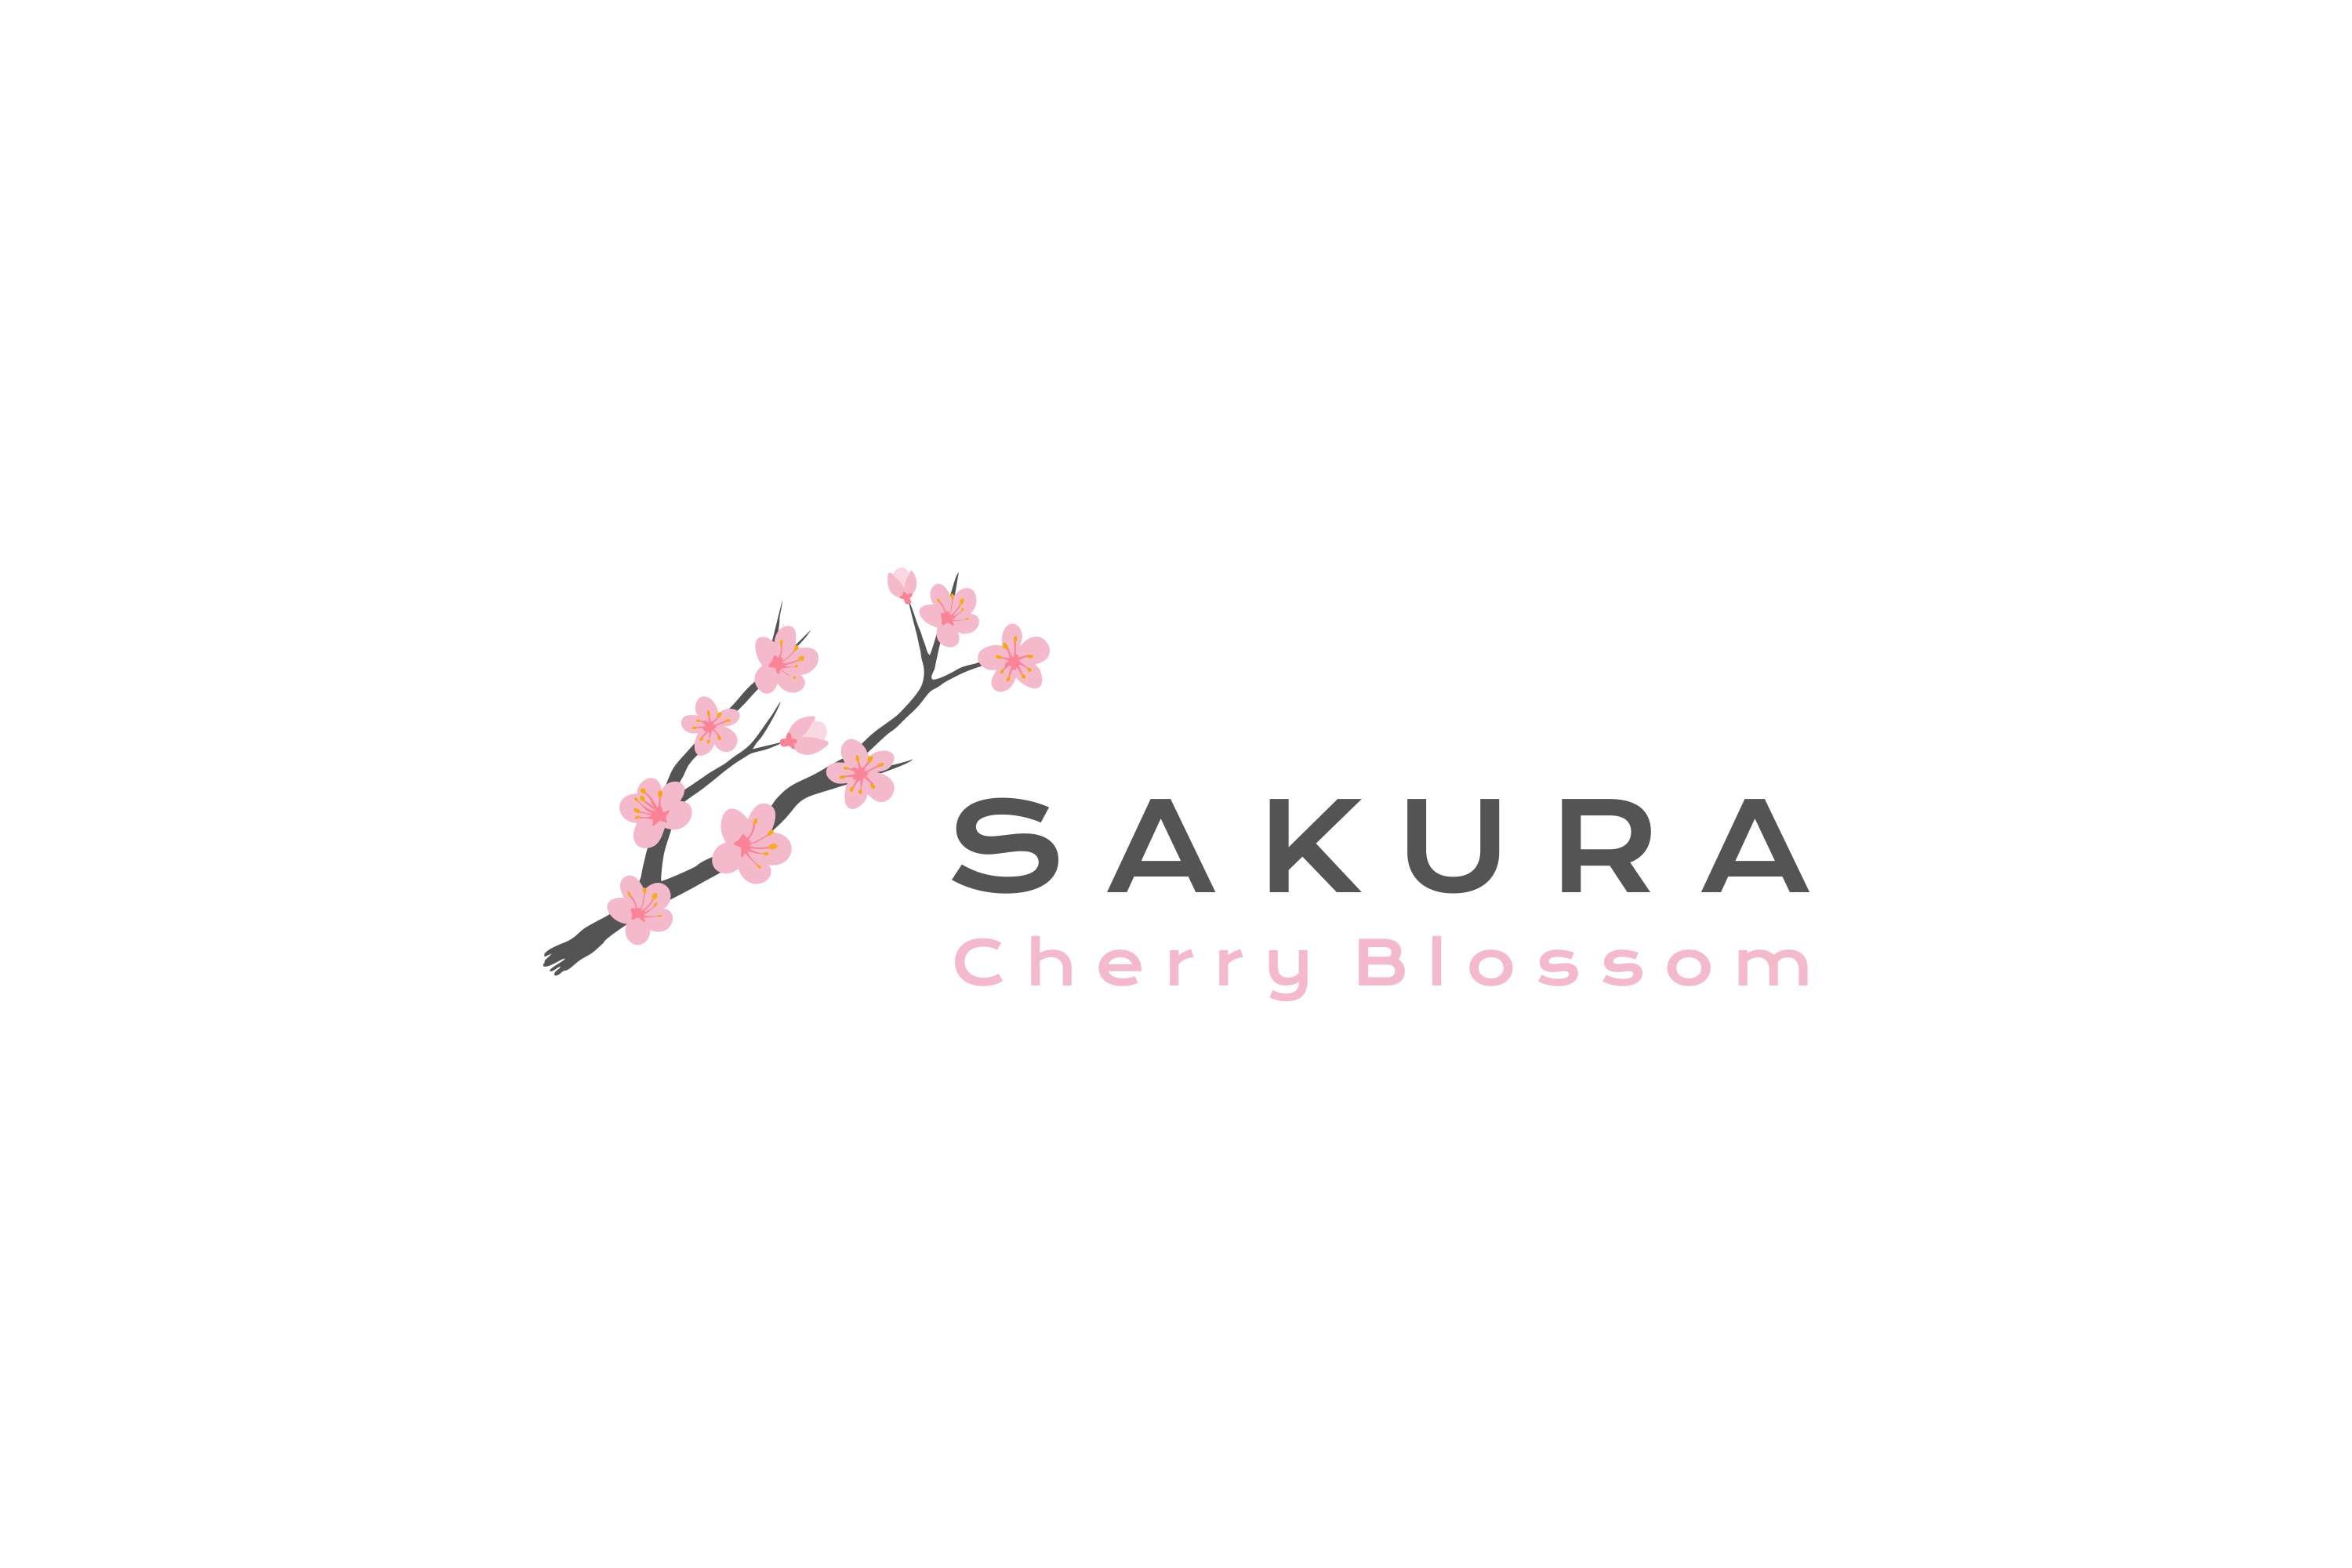 Sakura Flowers Logo Design cover image.